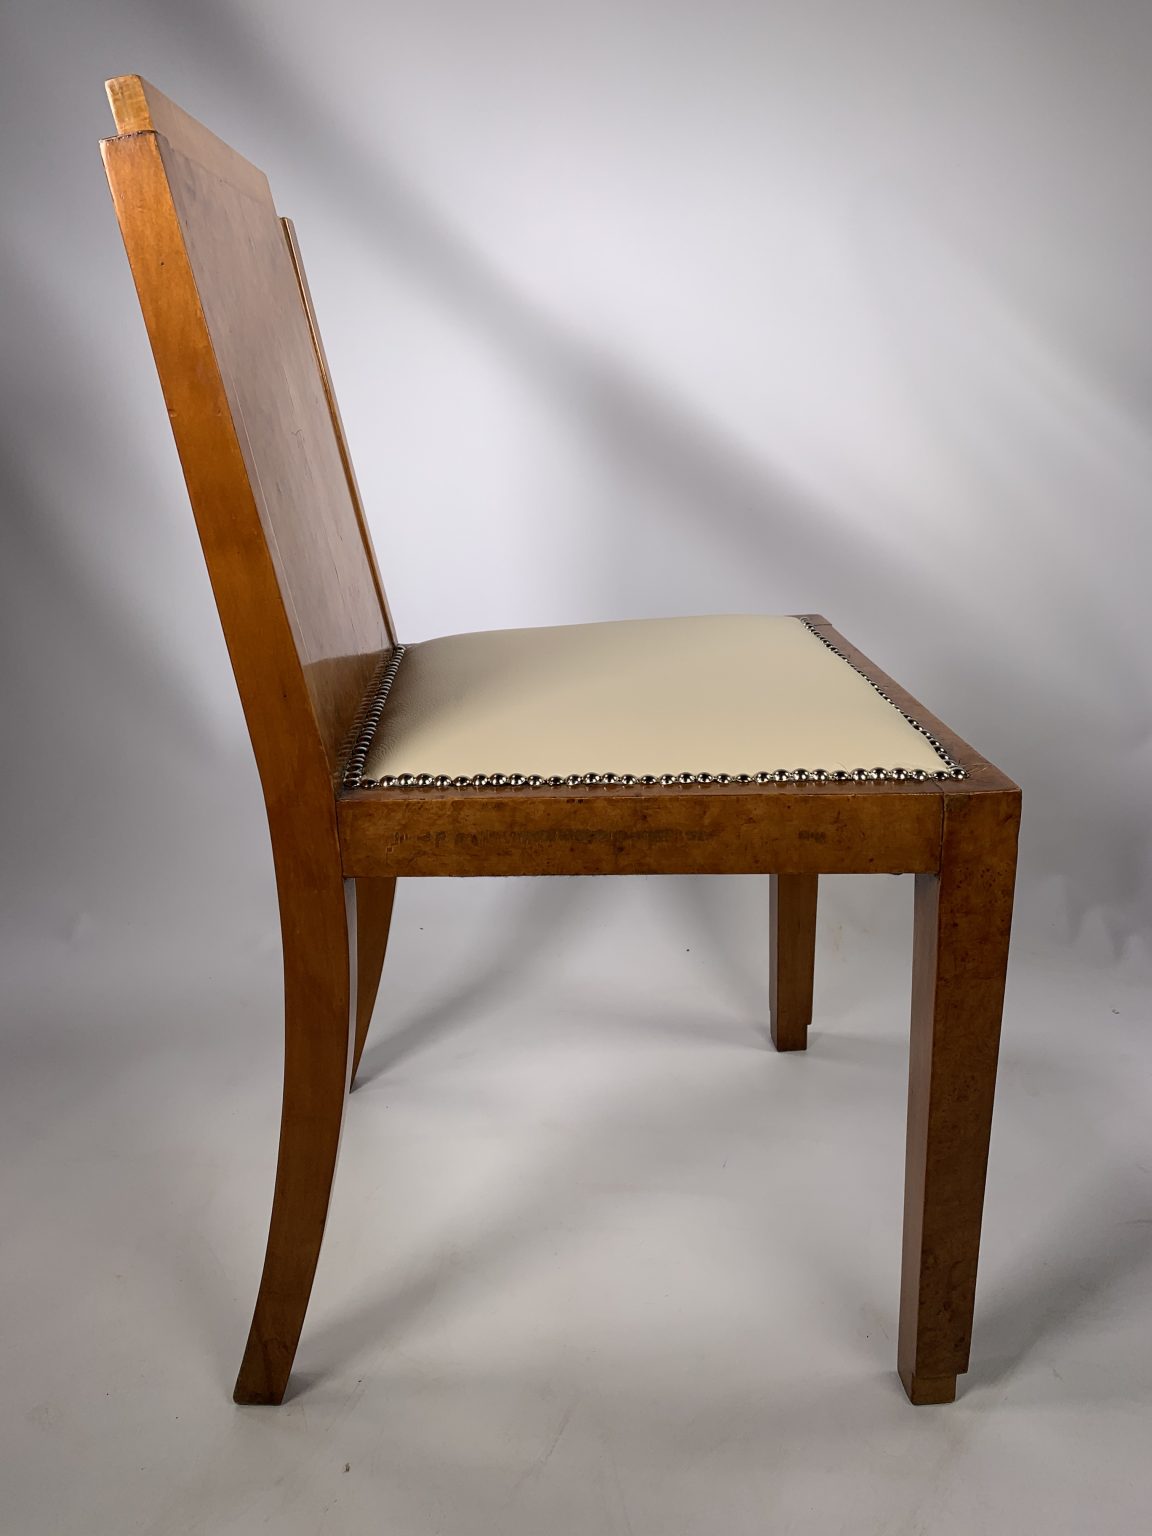 A Fine Art Deco Bedroom Chair Poirot Art Deco Furnishings